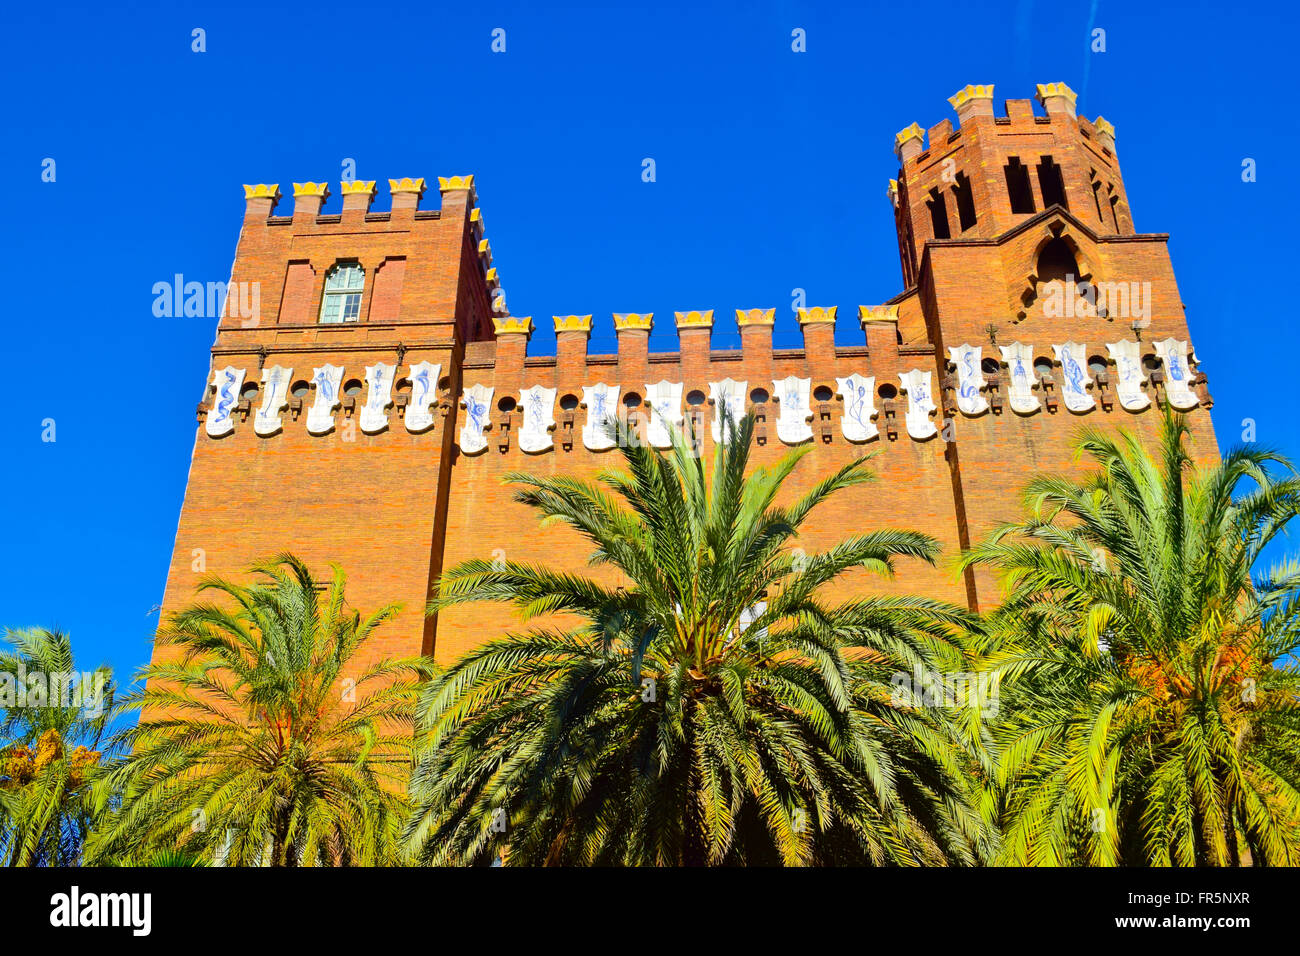 Castello dei tre draghi (Castell dels Tres Dragons). Parc de la Ciutadella, Barcellona, Spagna Foto Stock